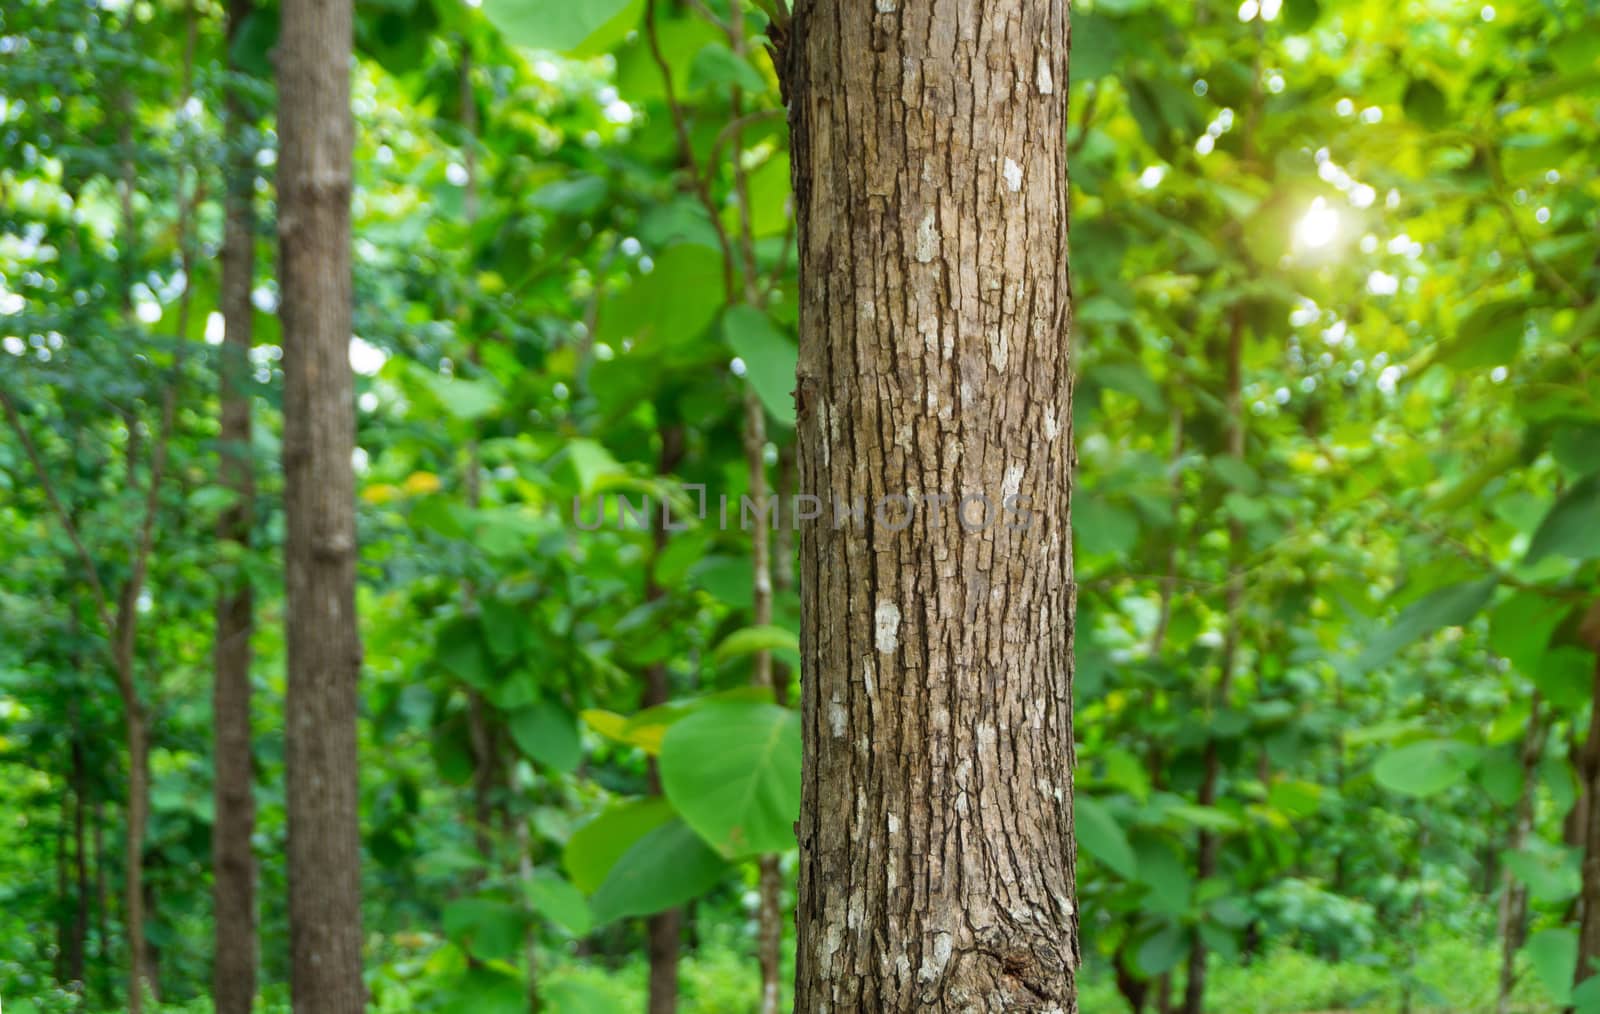 Trunk of Teak tree (Tectona grandis) is a tropical hardwood tree species placed in the flowering plant family Lamiaceae.